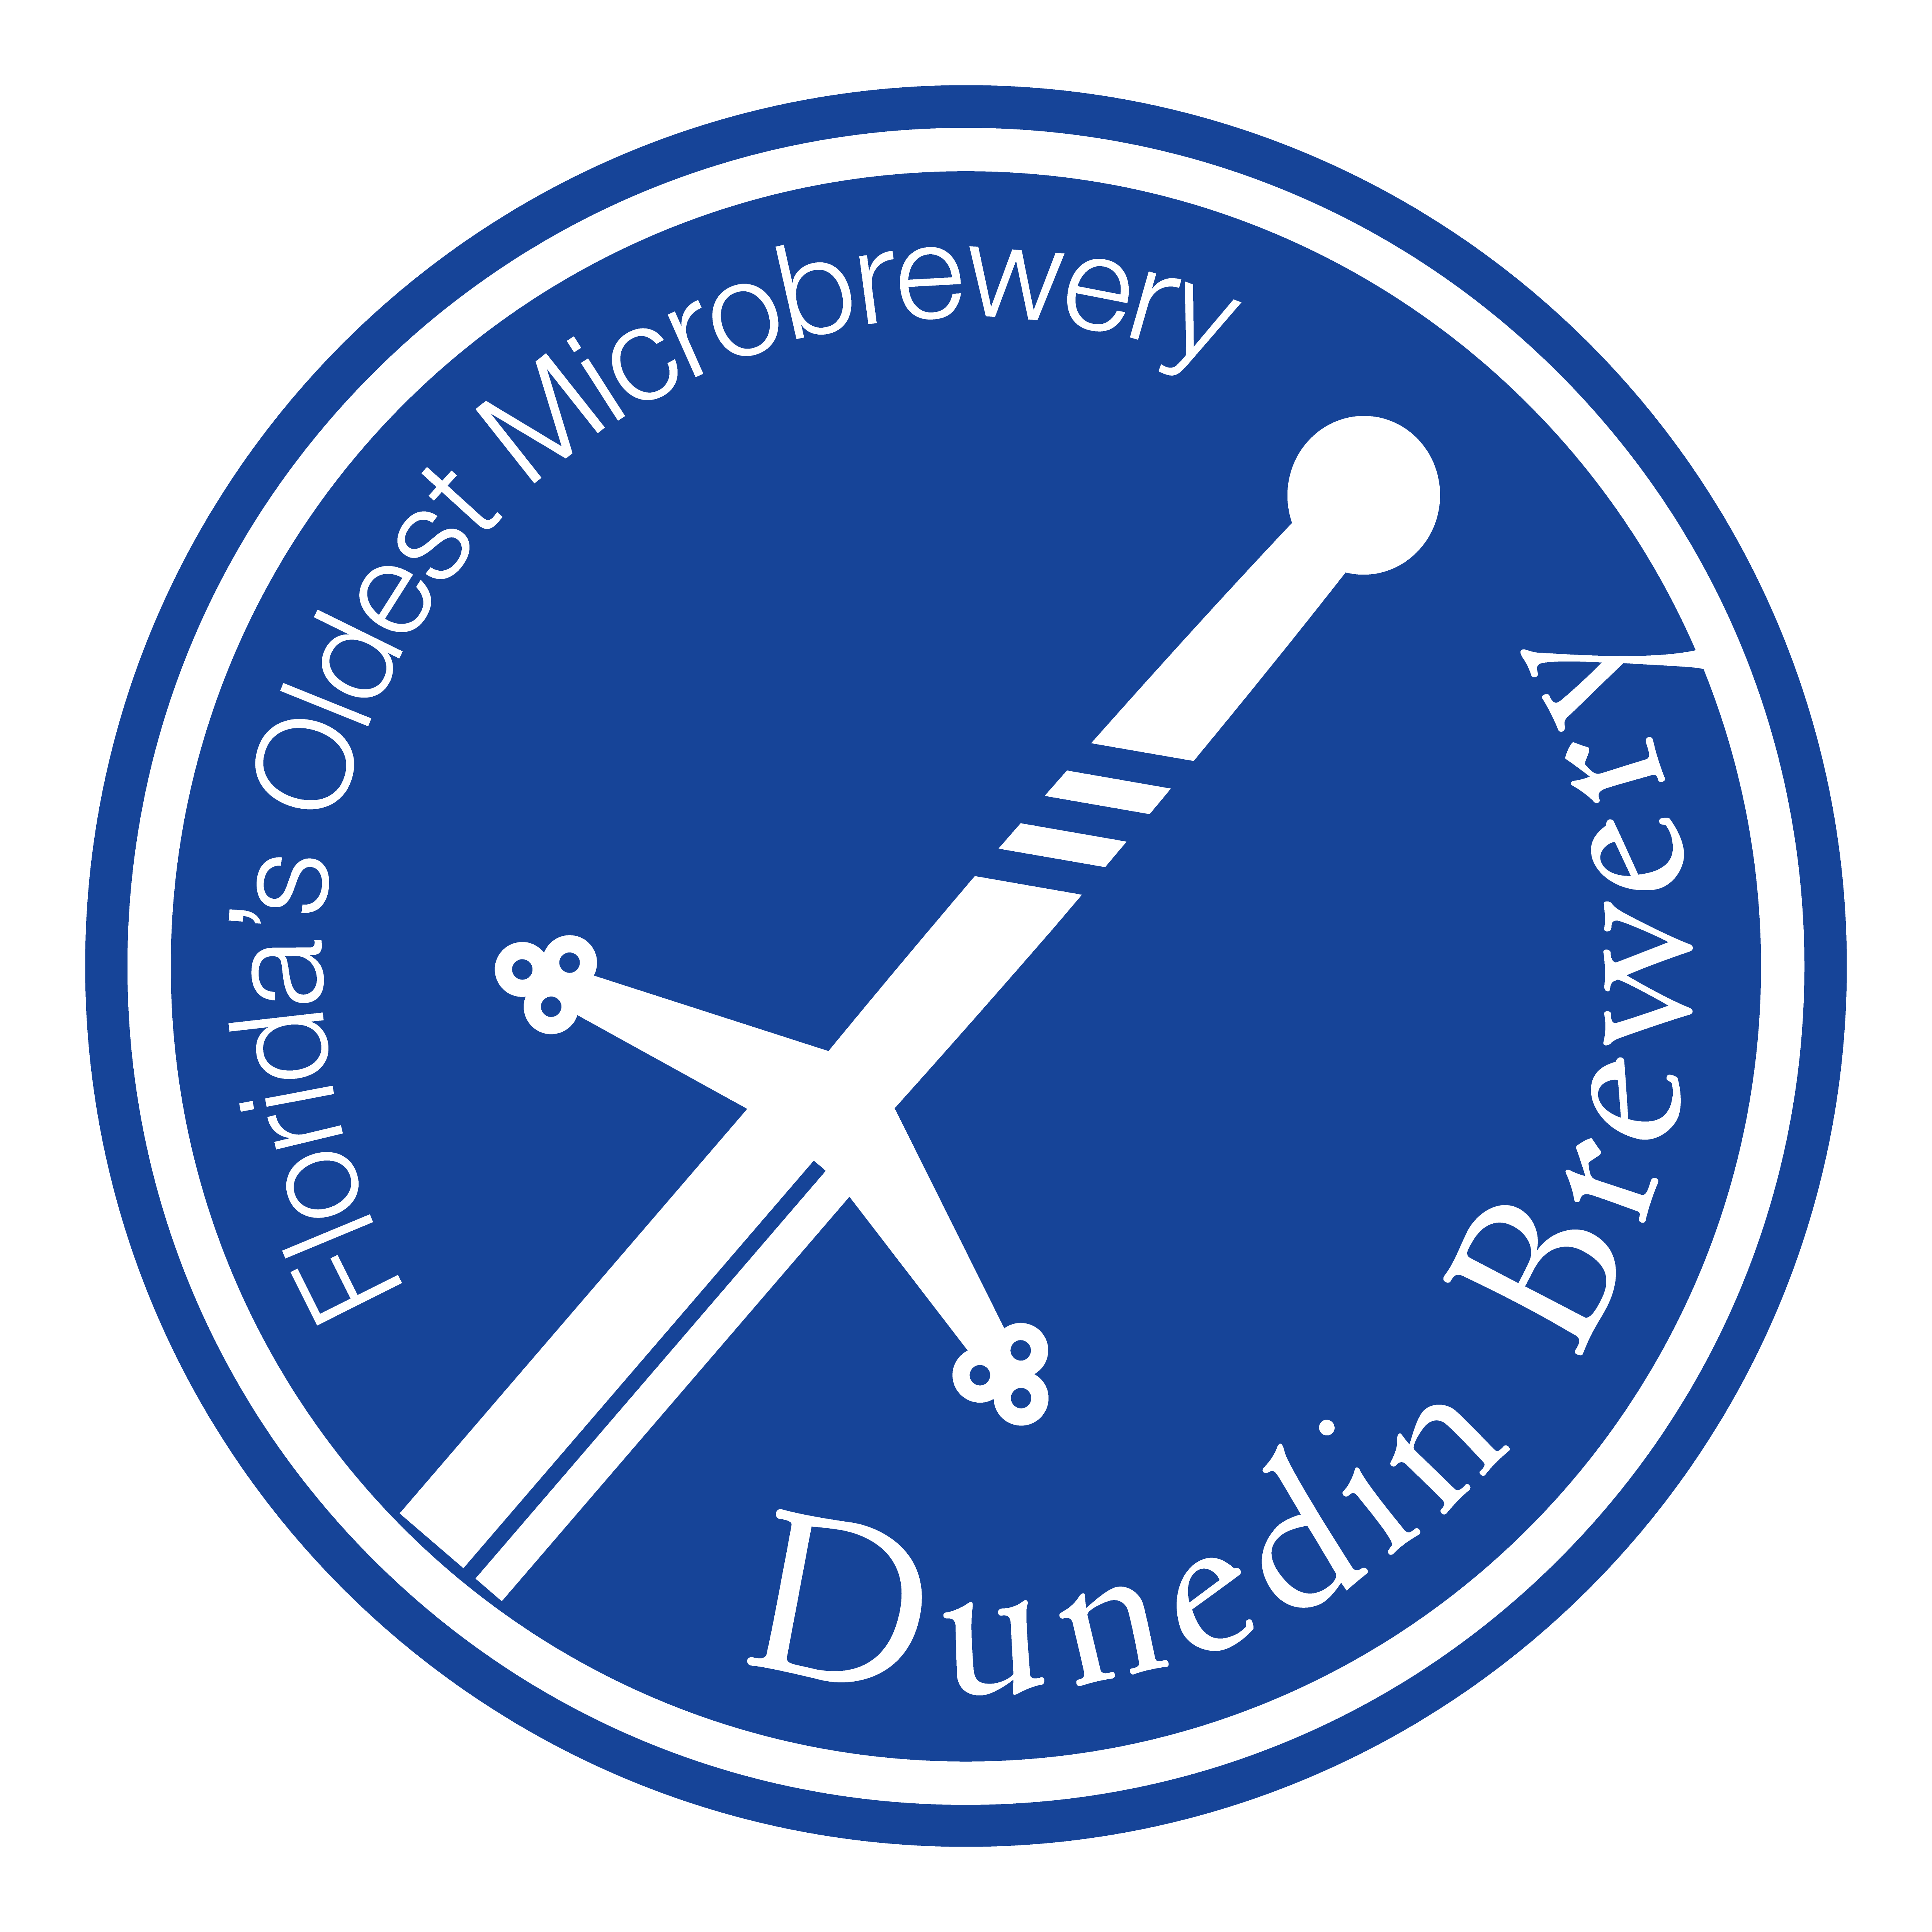 Dunedin Brewery